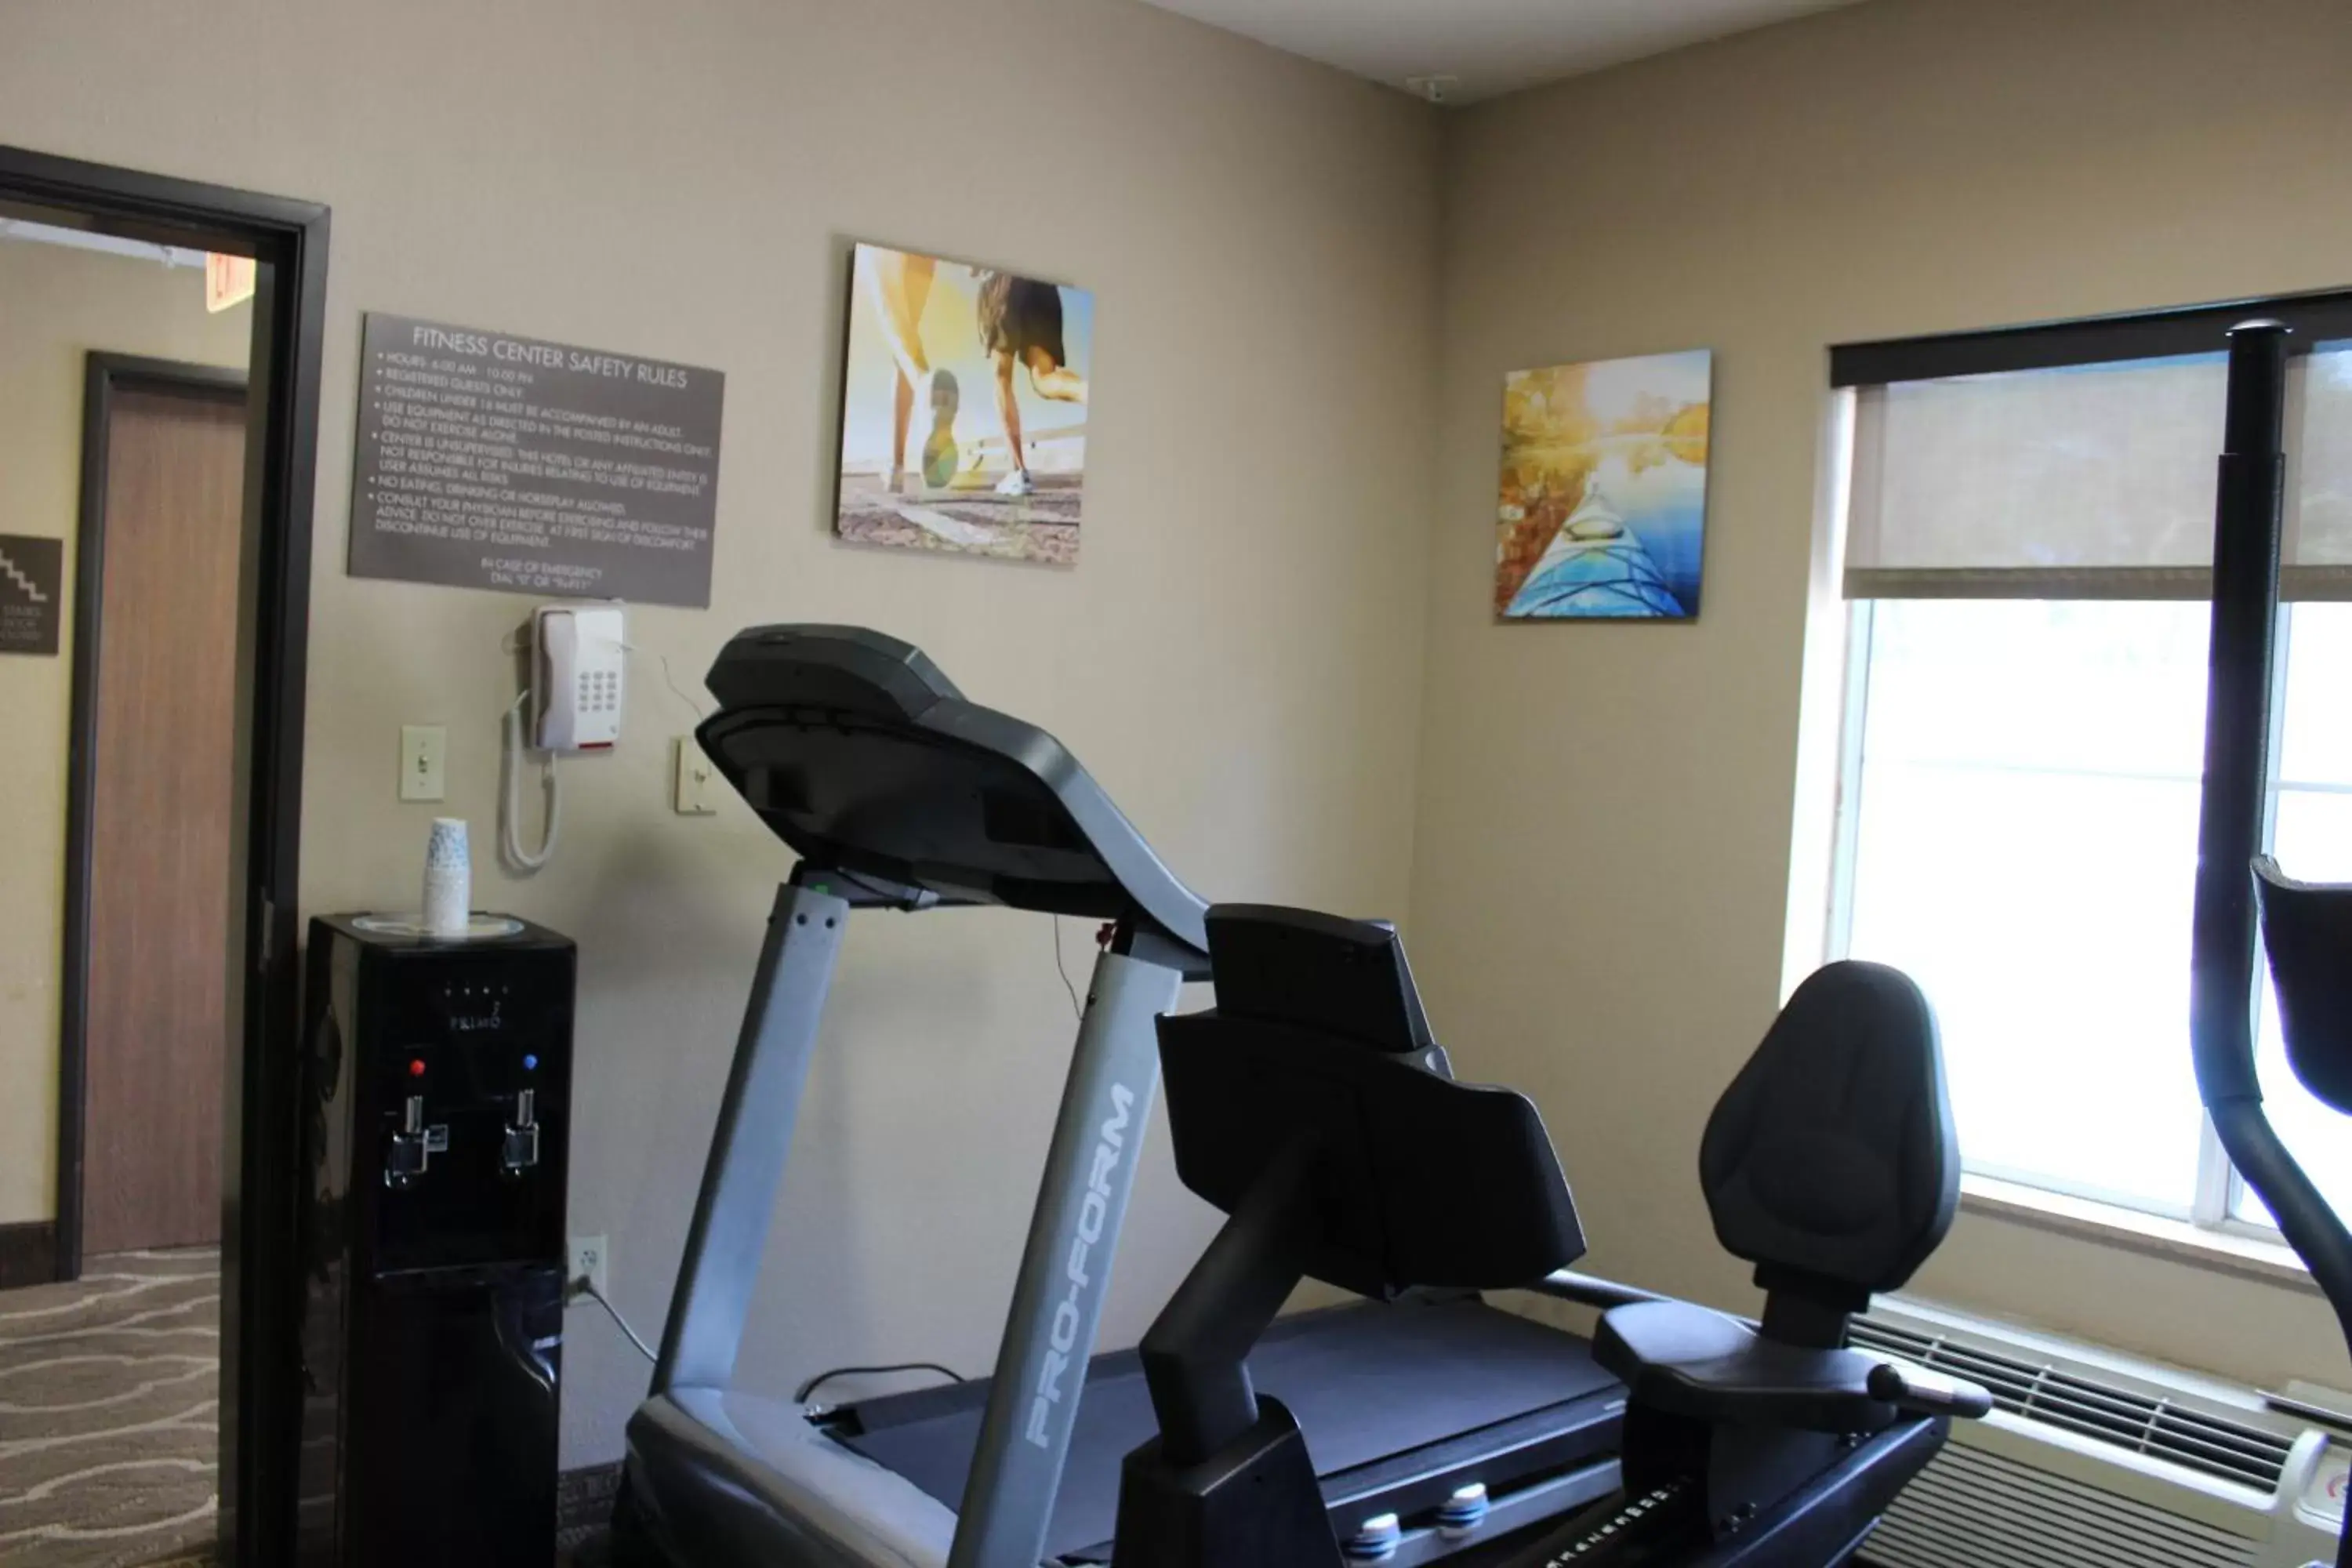 Fitness centre/facilities, Fitness Center/Facilities in Comfort Inn Green Valley I-19